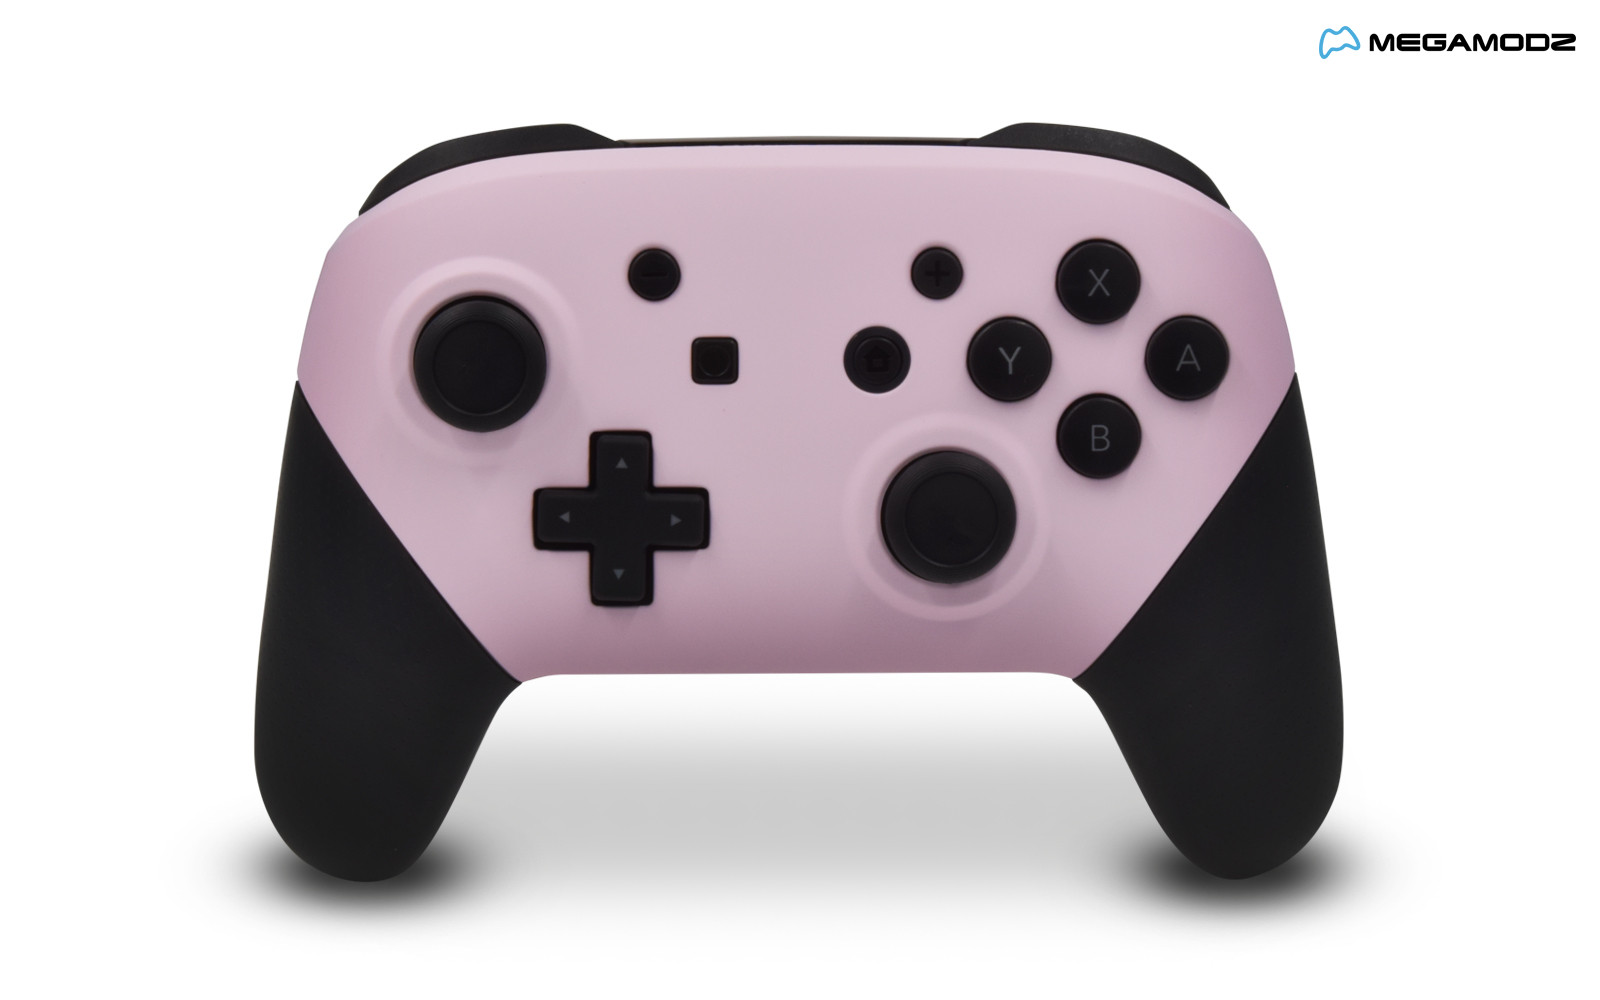 pink nintendo switch controller